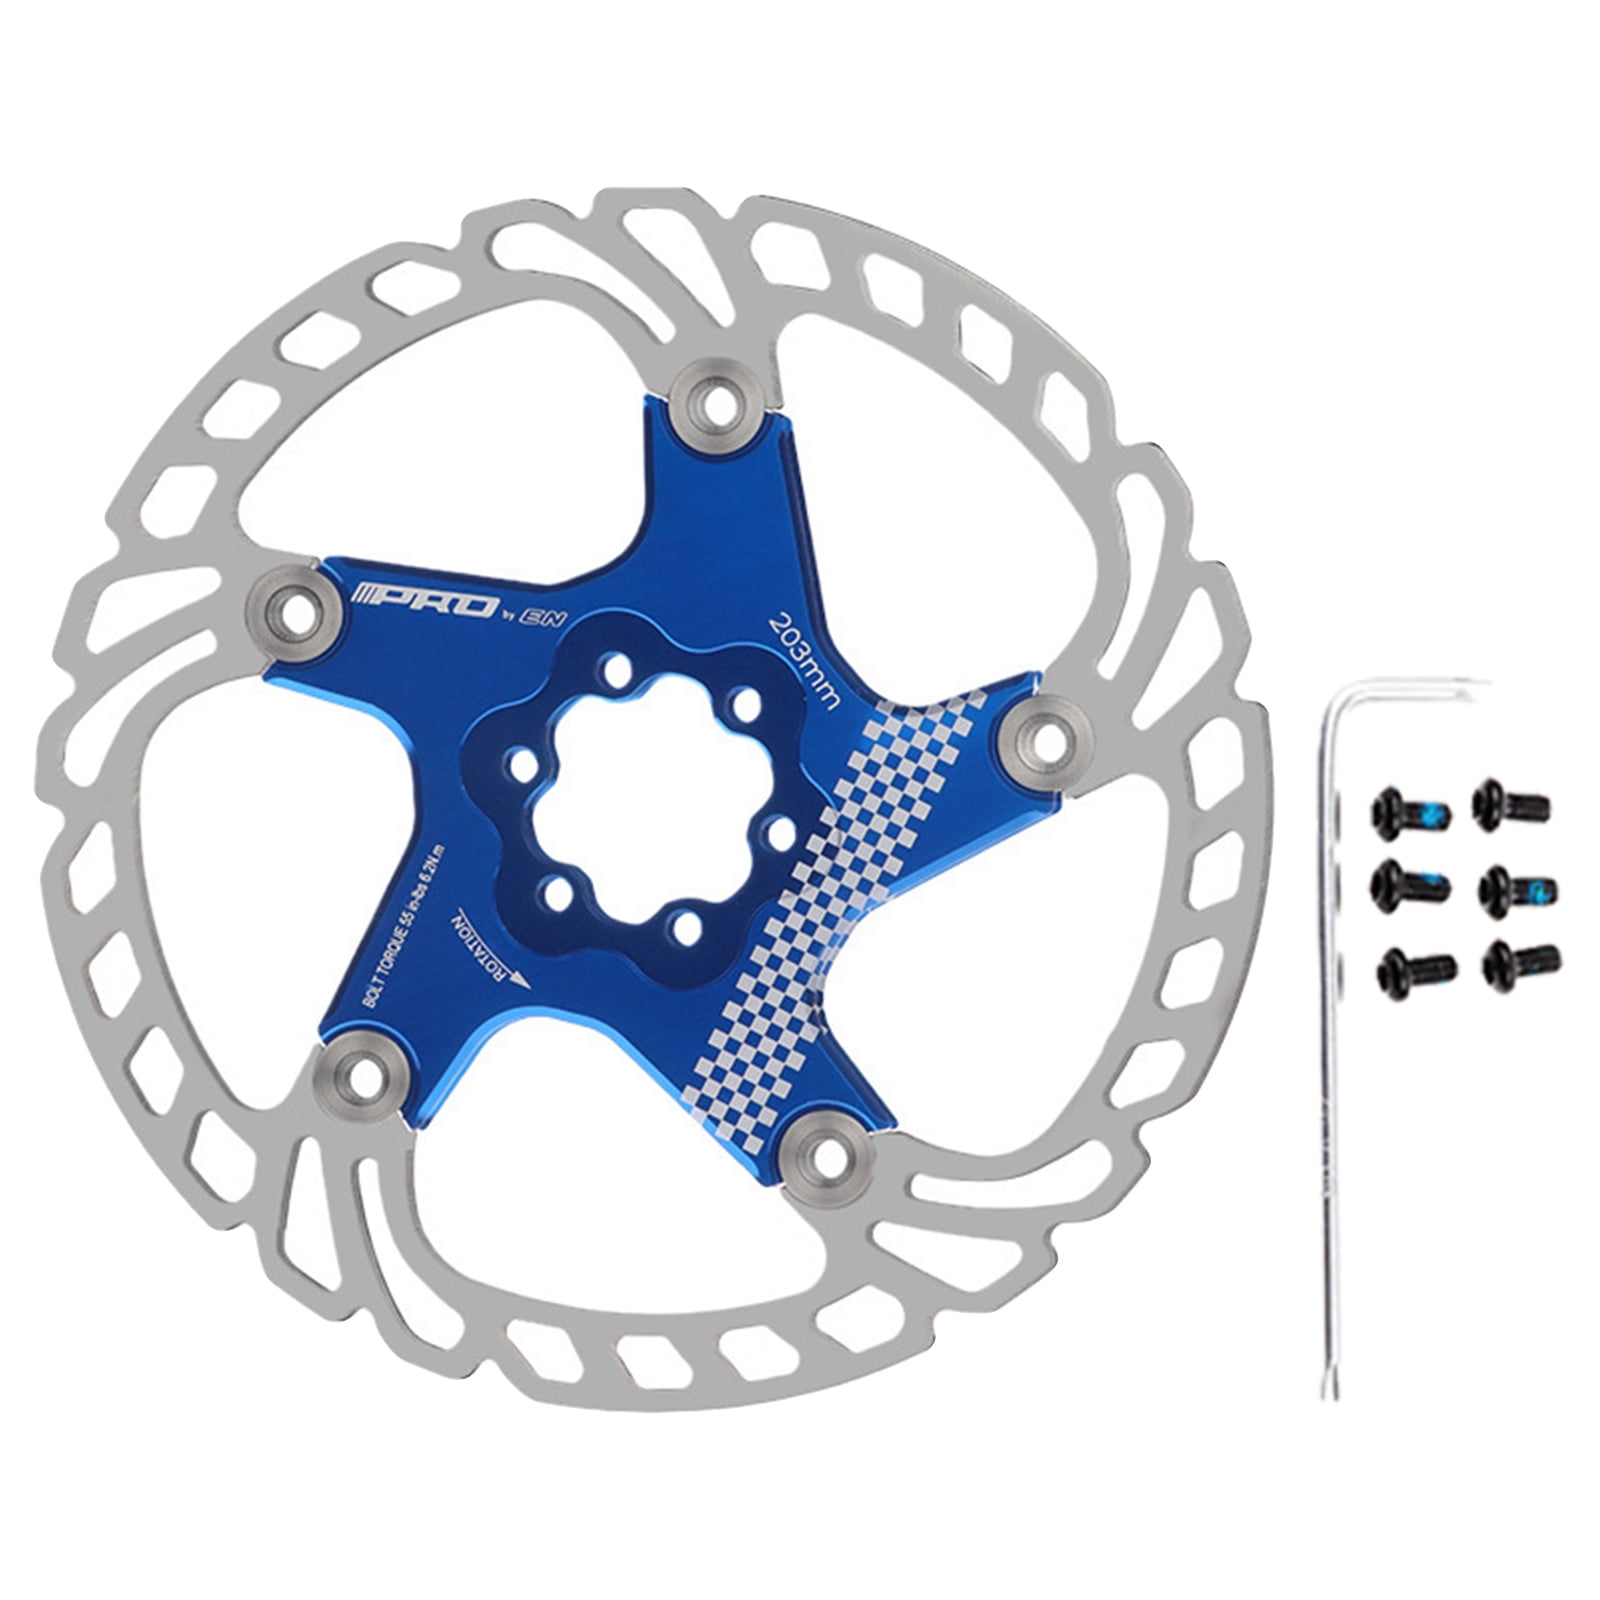 2x 203mm Rotors MTB Bicycle Bike Mechanical Disc Brake 12pcs Bolts Rotor Steel 